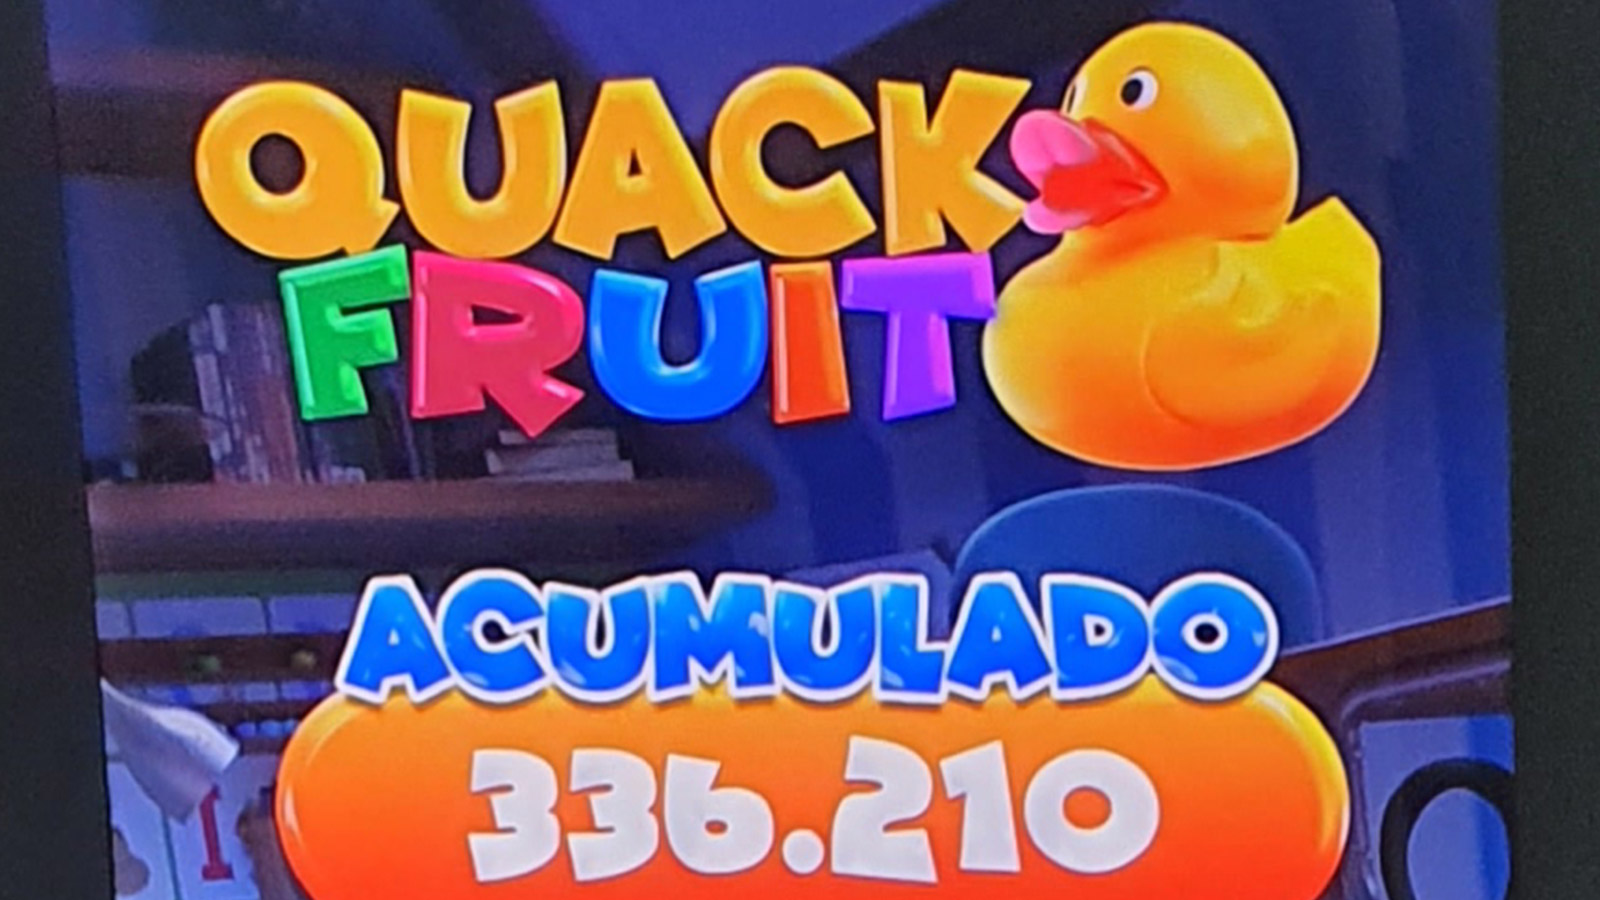 juegos-friendly-quack-fruit-1.jpg